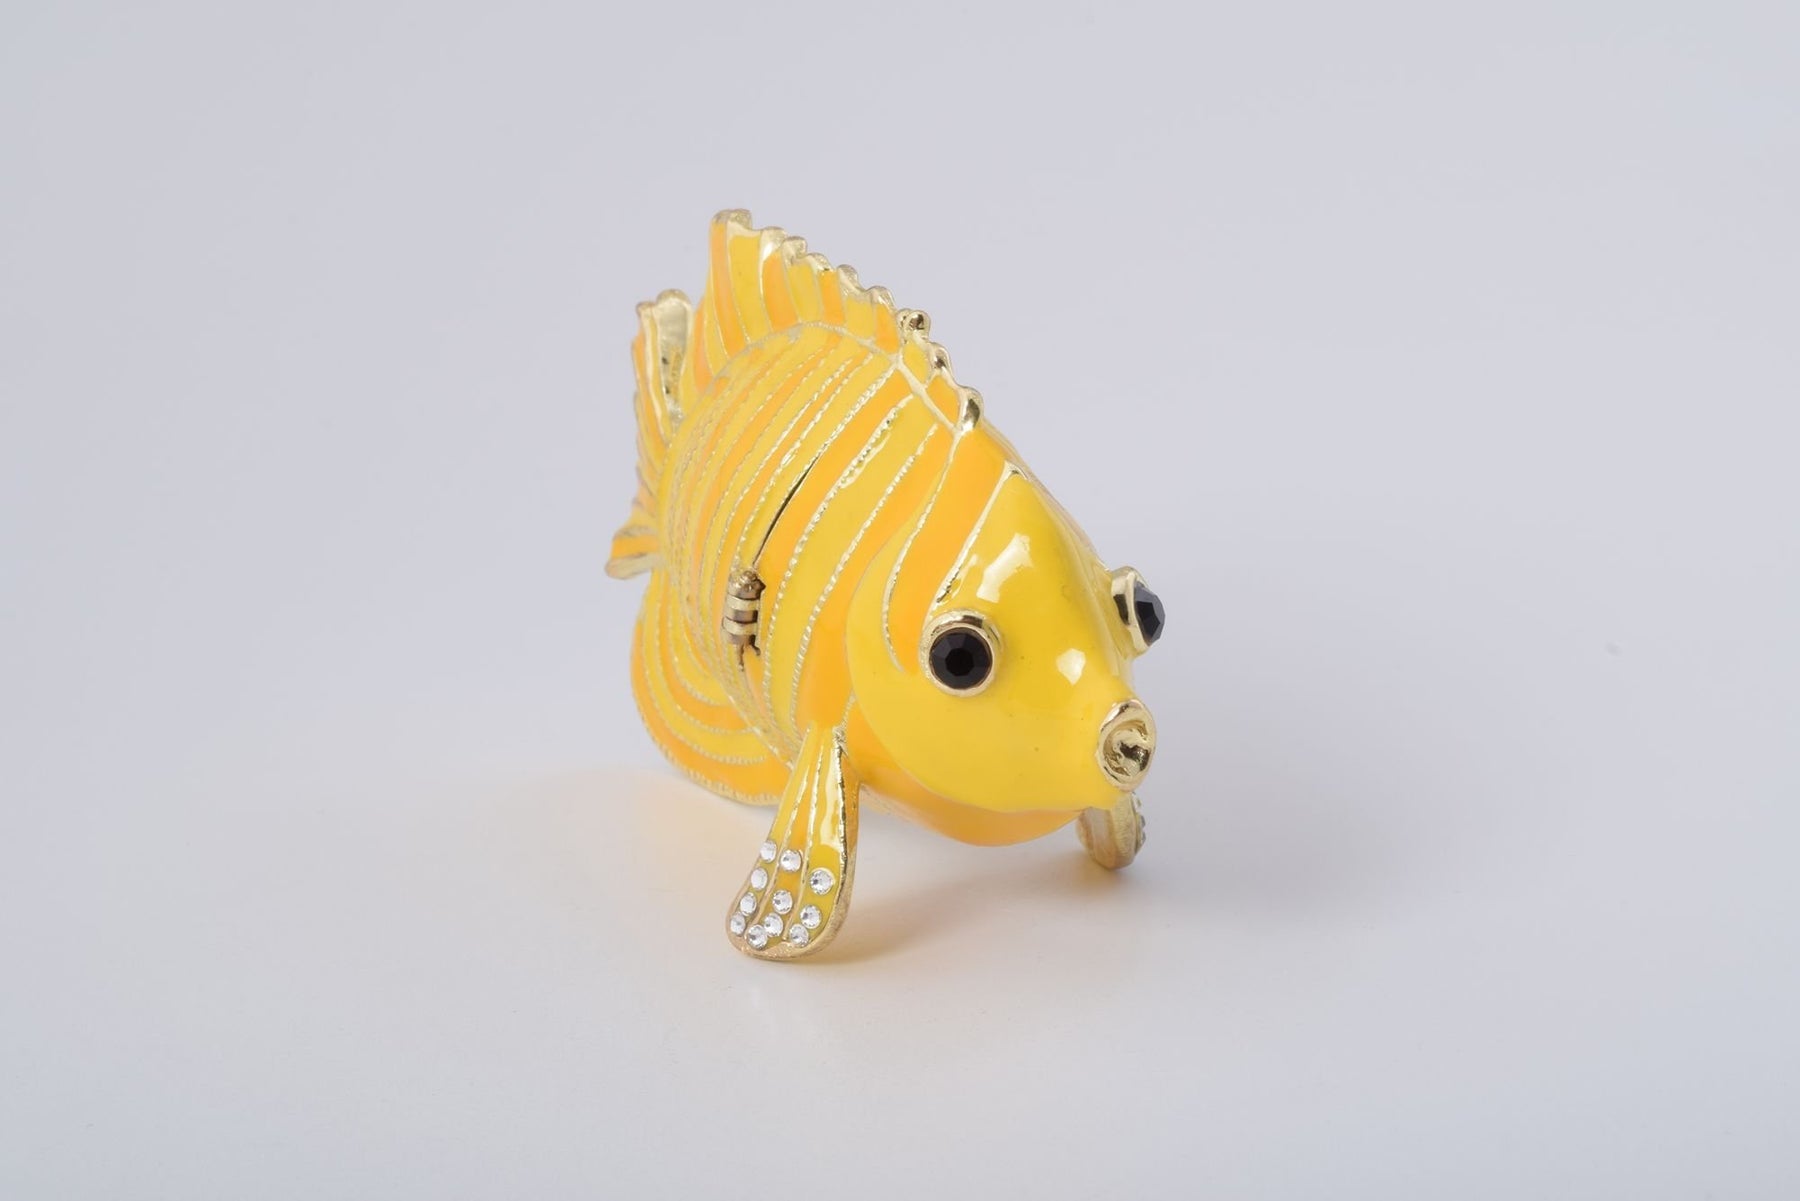 Keren Kopal Yellow Fish  56.75